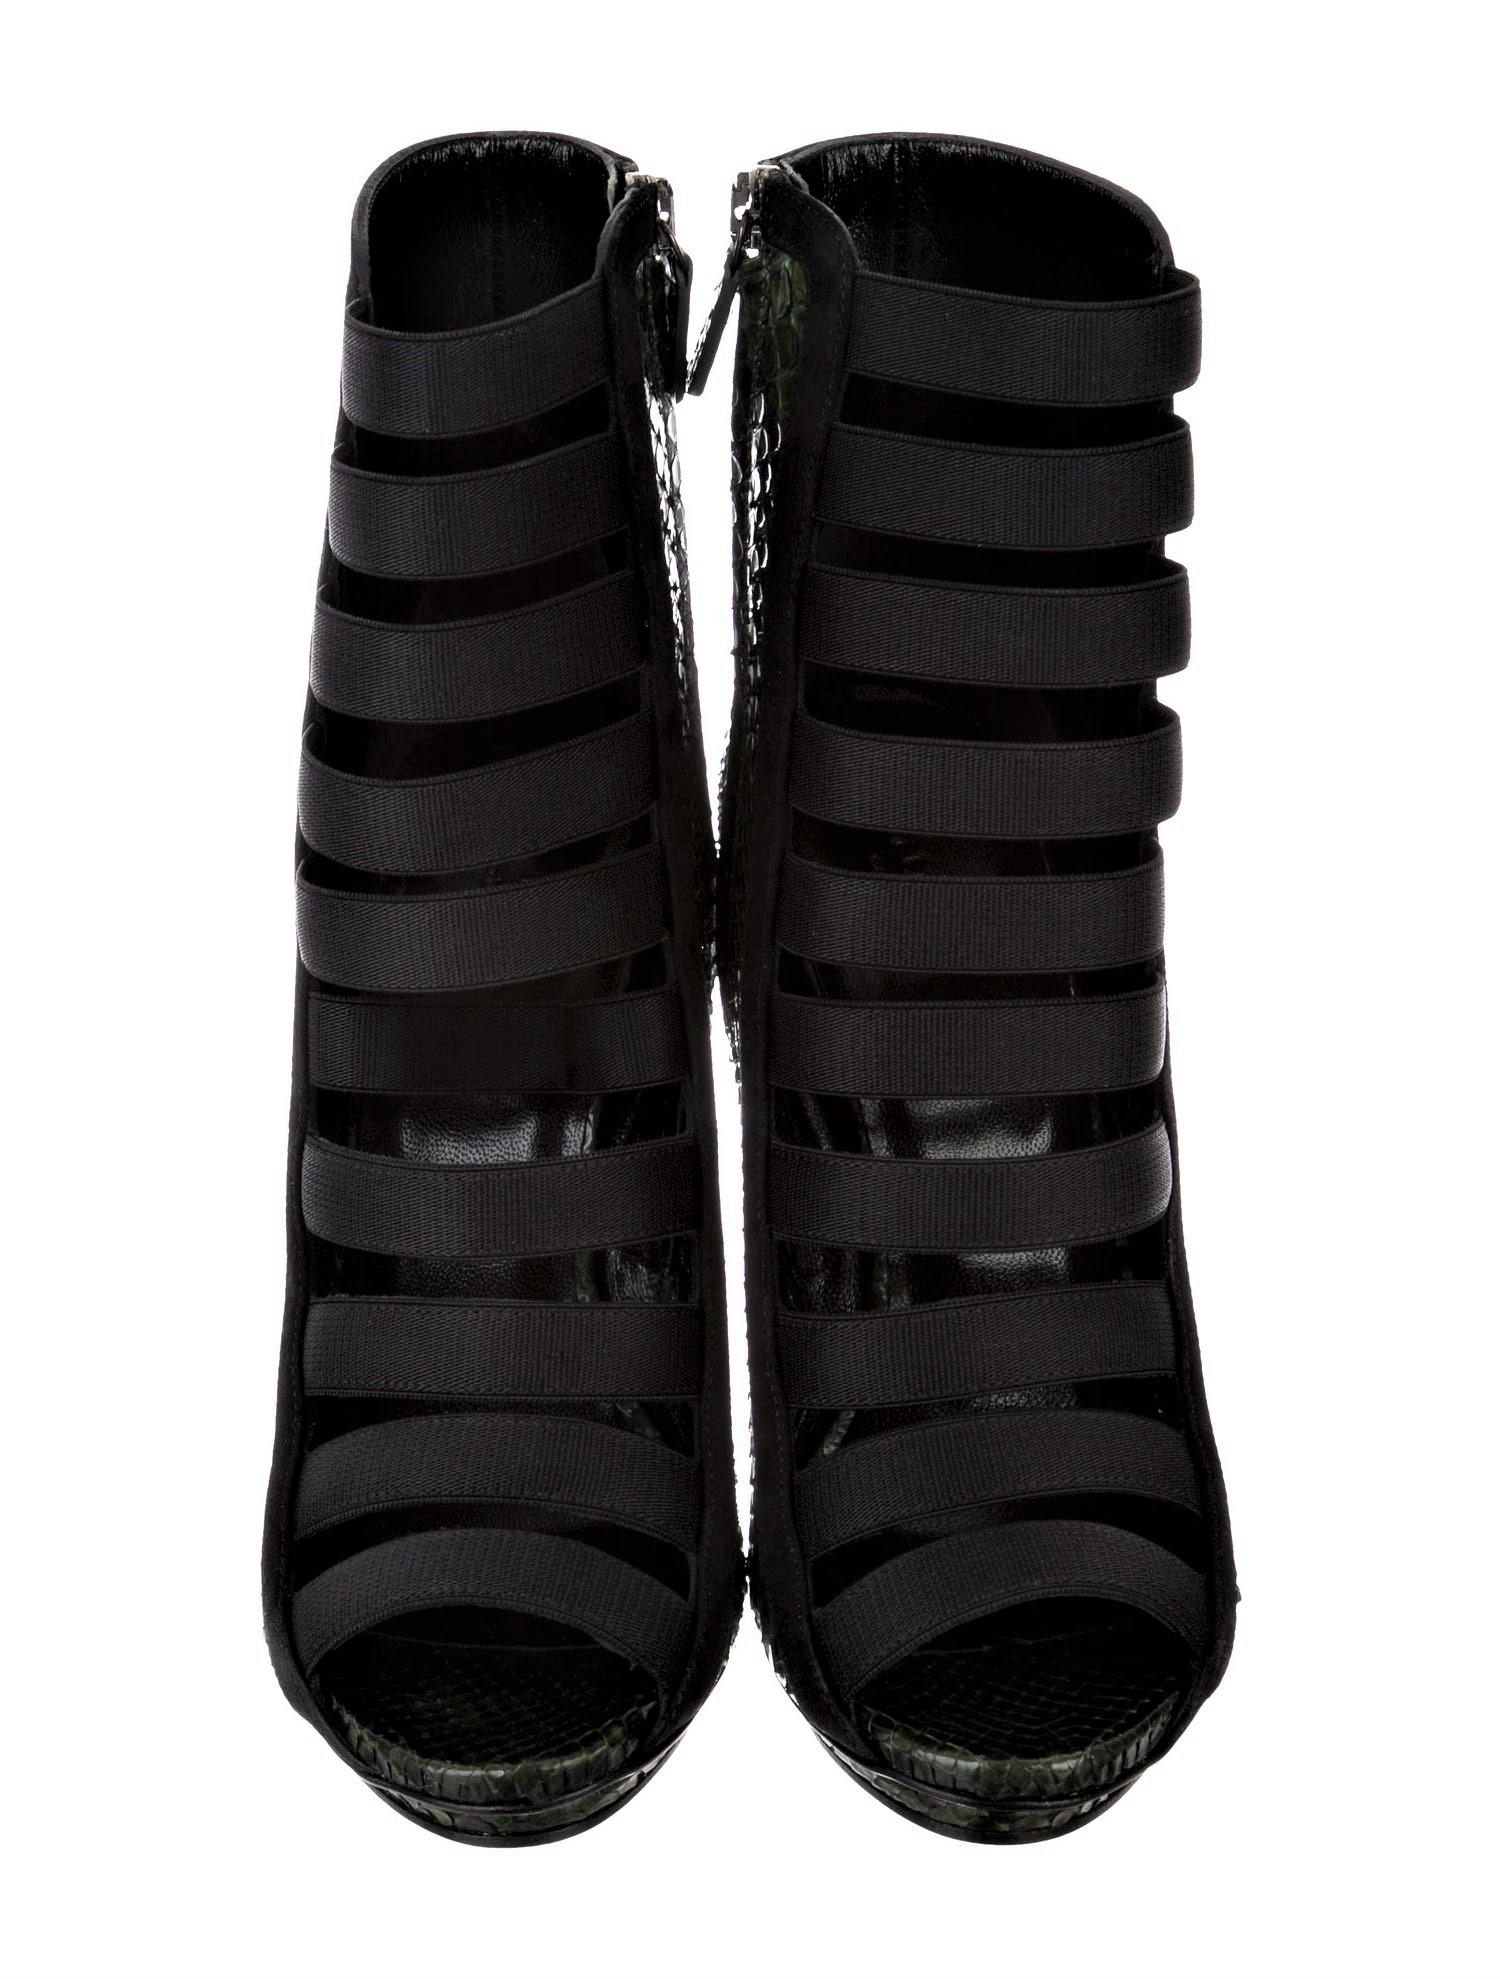 New Gucci Python Snakeskin S/S 2014 Runway Nicki Minaj Heels Booties Boots Sz 38 8